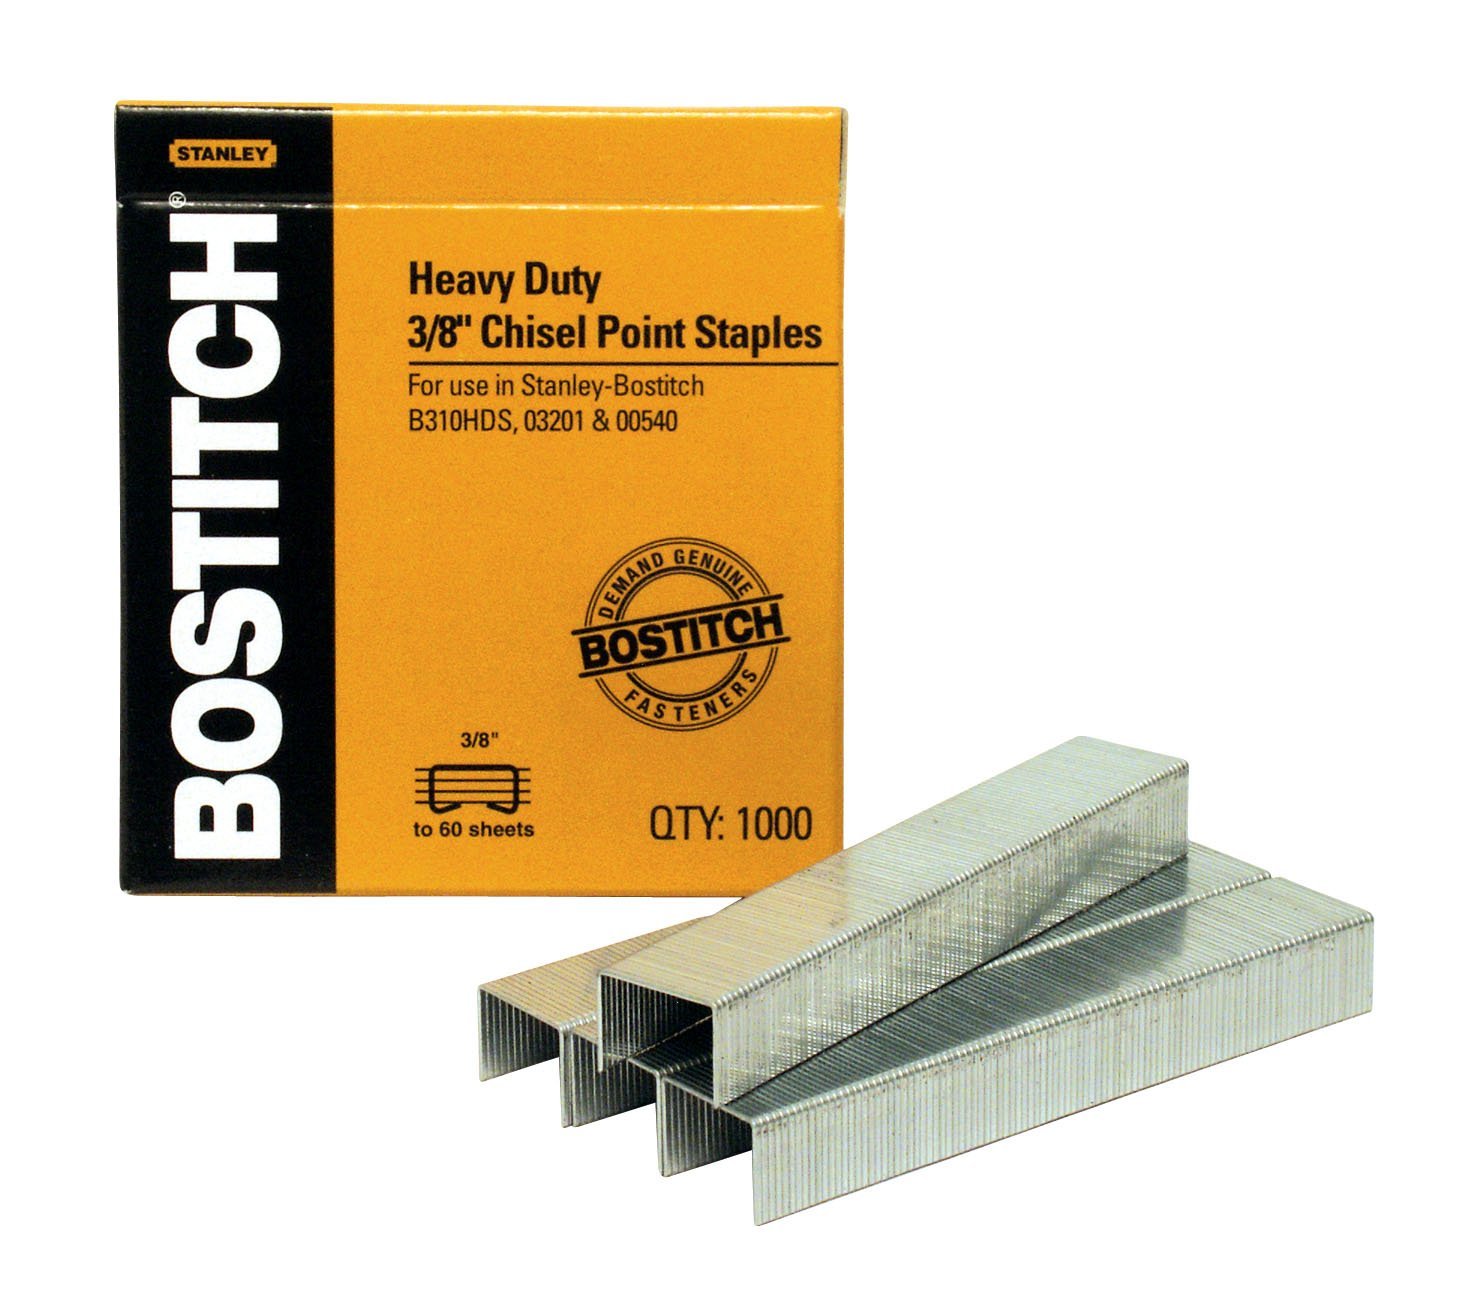 Bostitch Stanley Bostitch SB353/8-1M Heavy Duty Staple Lot of 20,000 20 Boxes of 1,000 